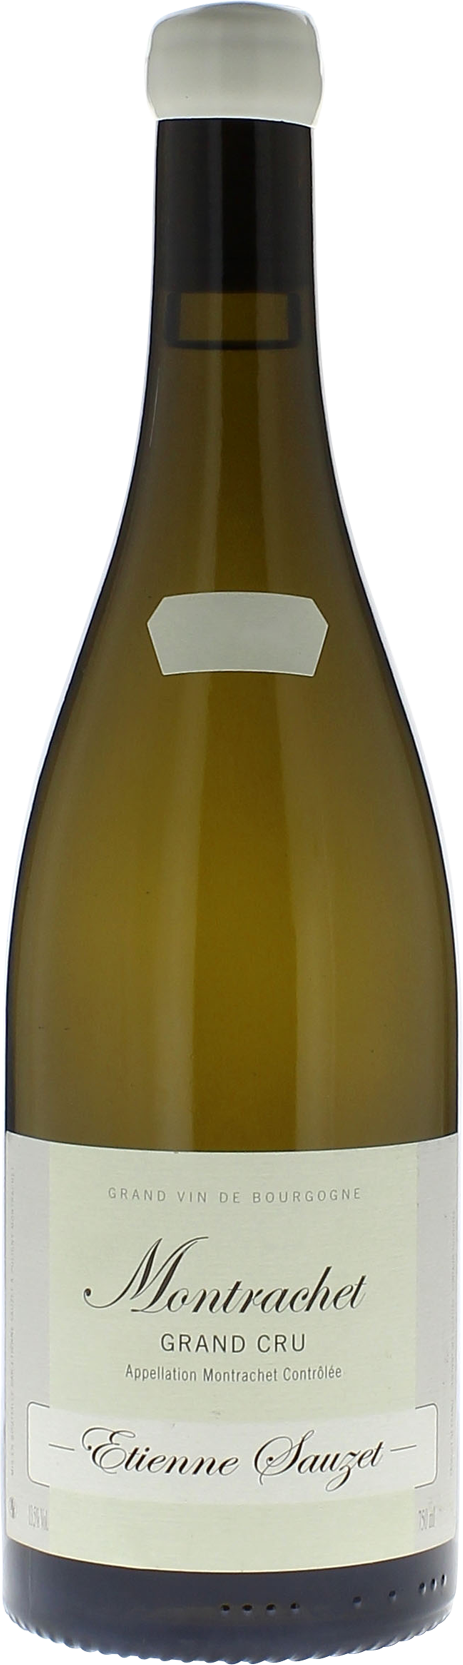 Montrachet grand cru 2014 Domaine SAUZET, Bourgogne blanc